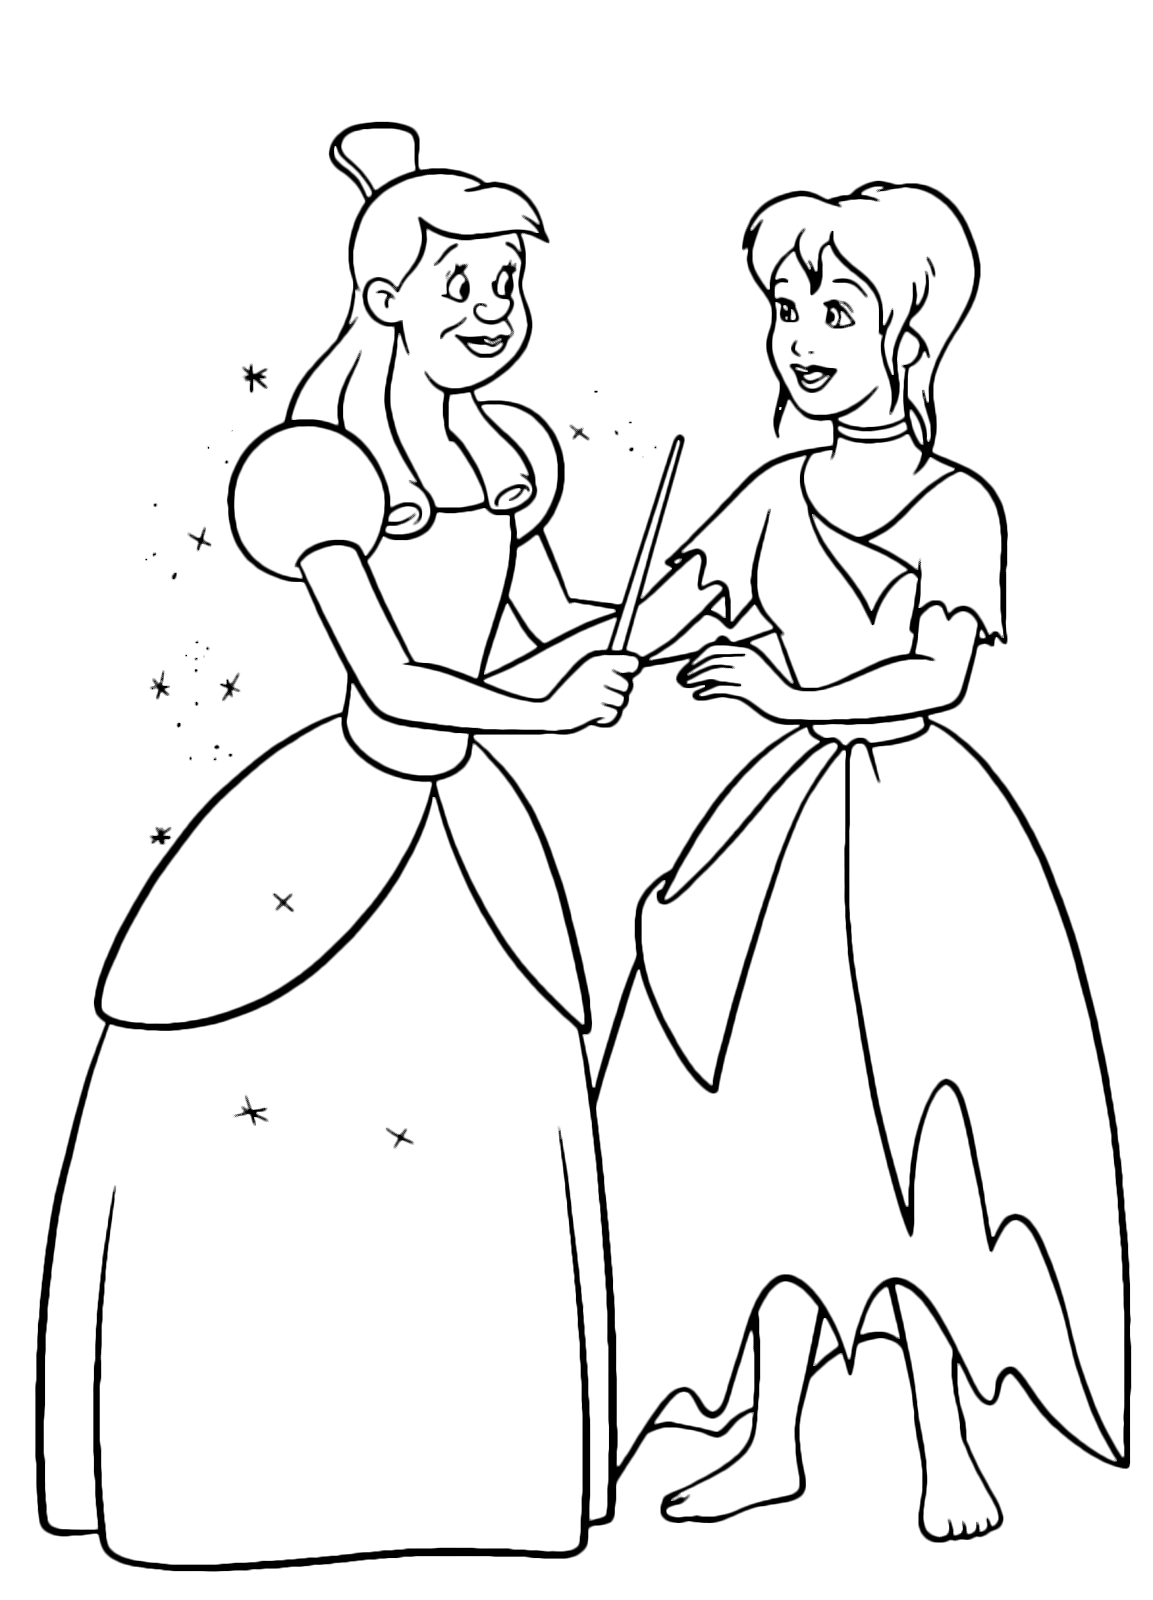 Cinderella - Anastasia returns the magic wand to Cinderella